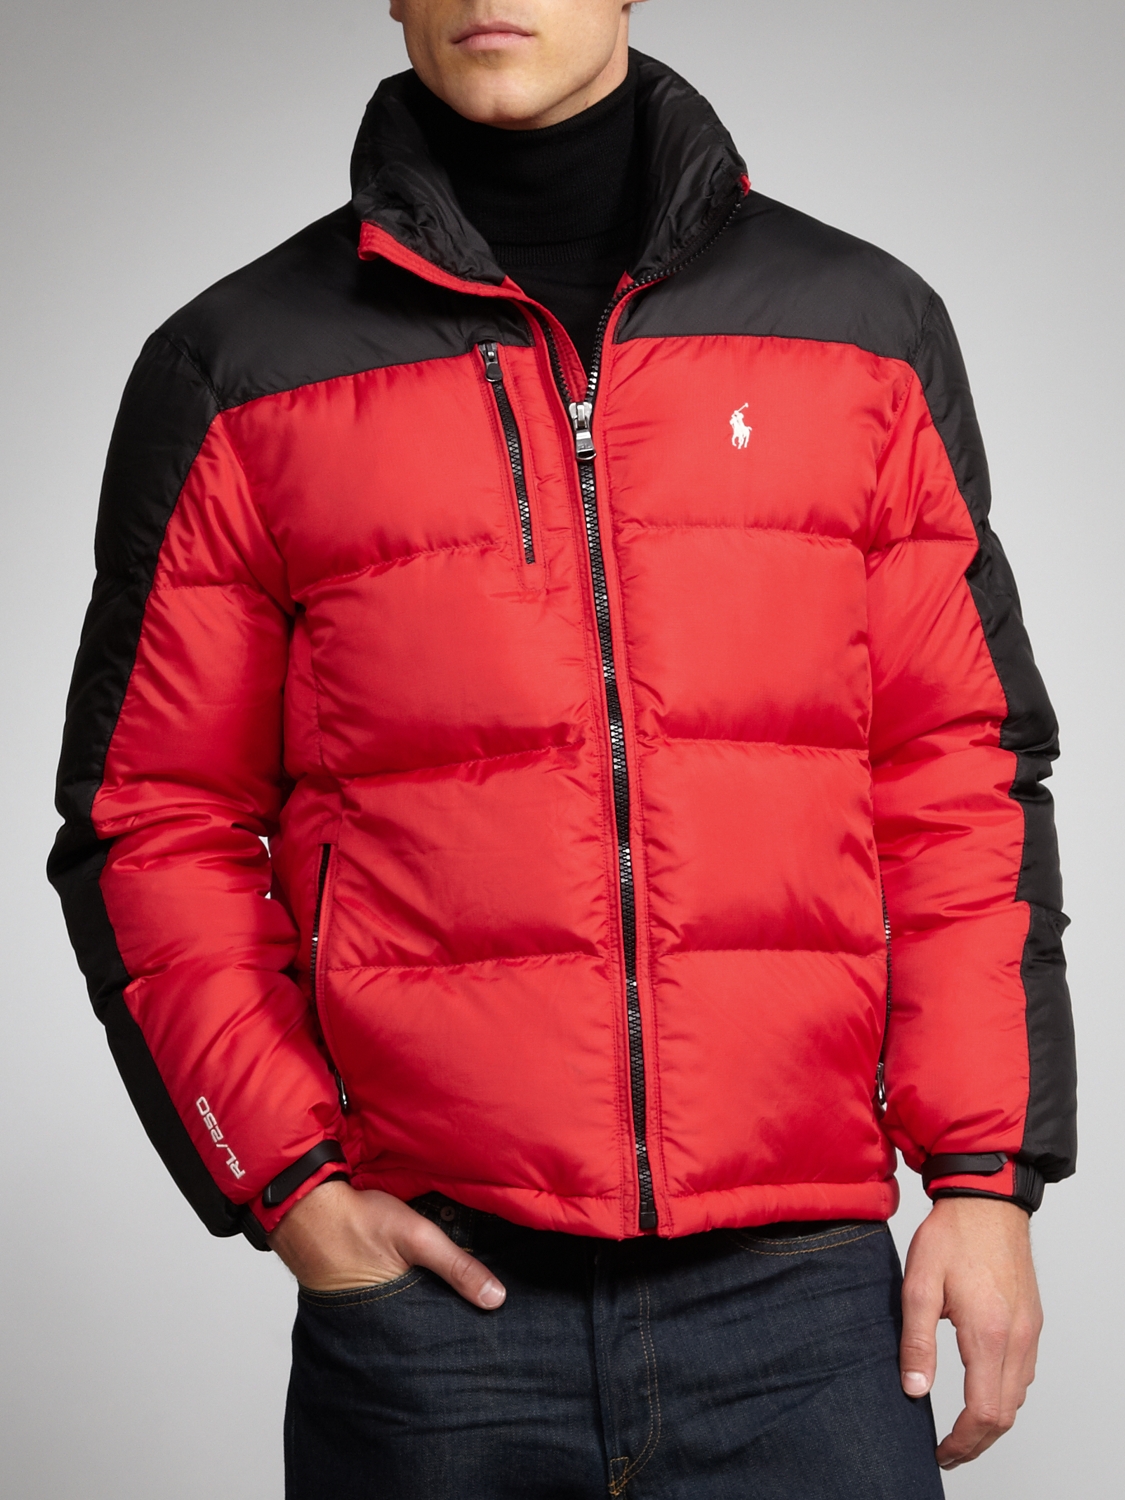 Polo Ralph Lauren Snow Puffer Jacket Red for Men - Lyst